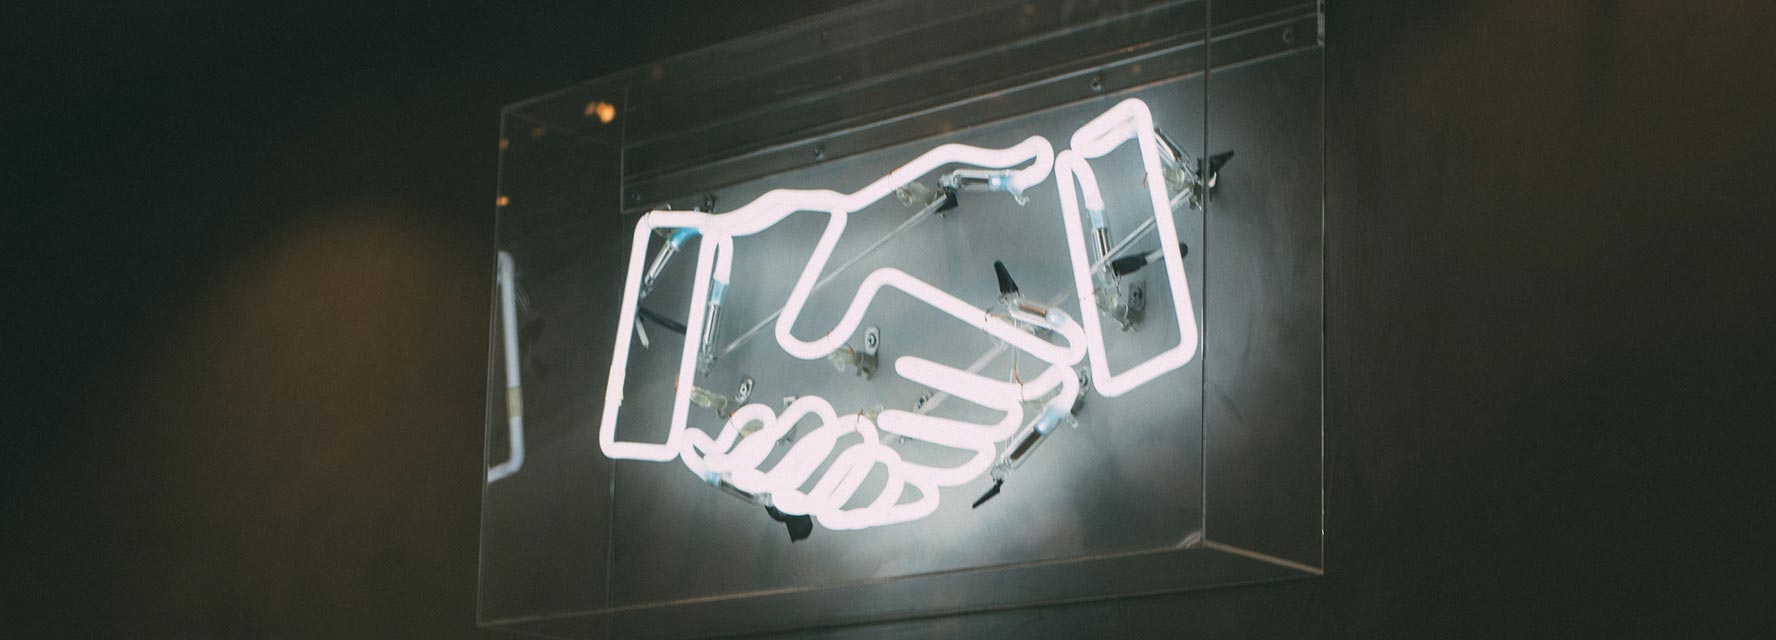 Neon sign of shaking hands symbolizing affiliate partnership